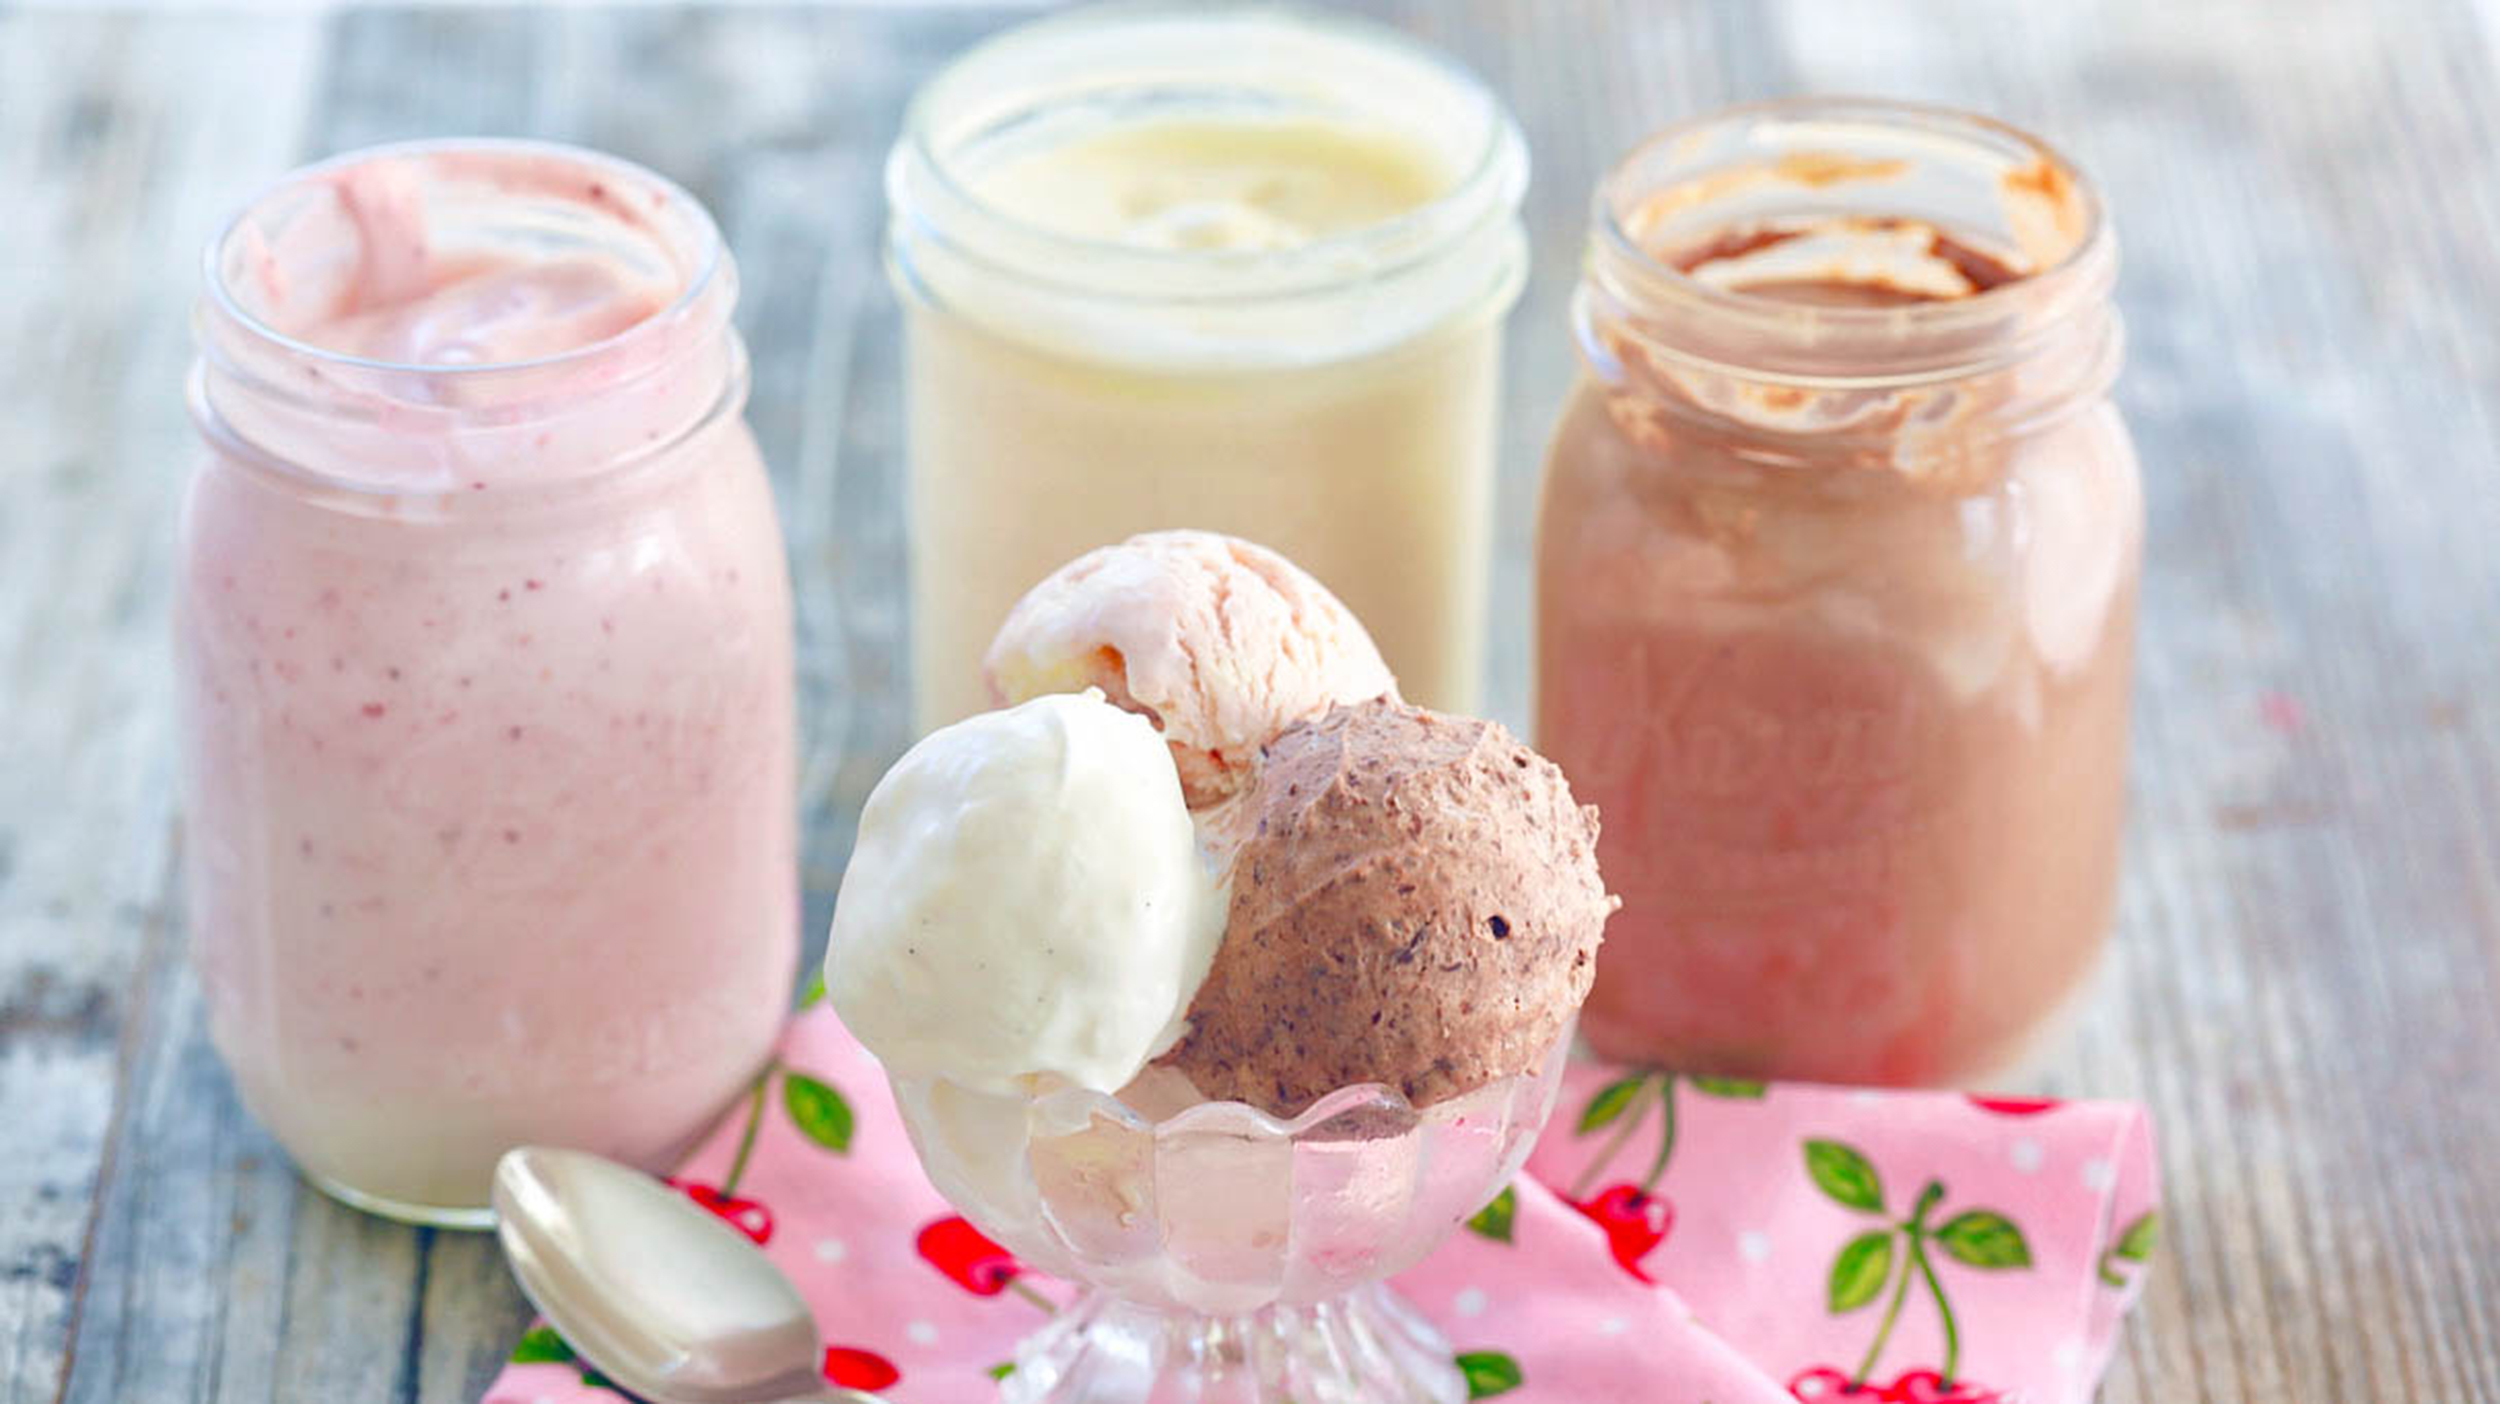 Mason jar ice cream is the best summer treat: Here’s how to make it | CNN Underscored